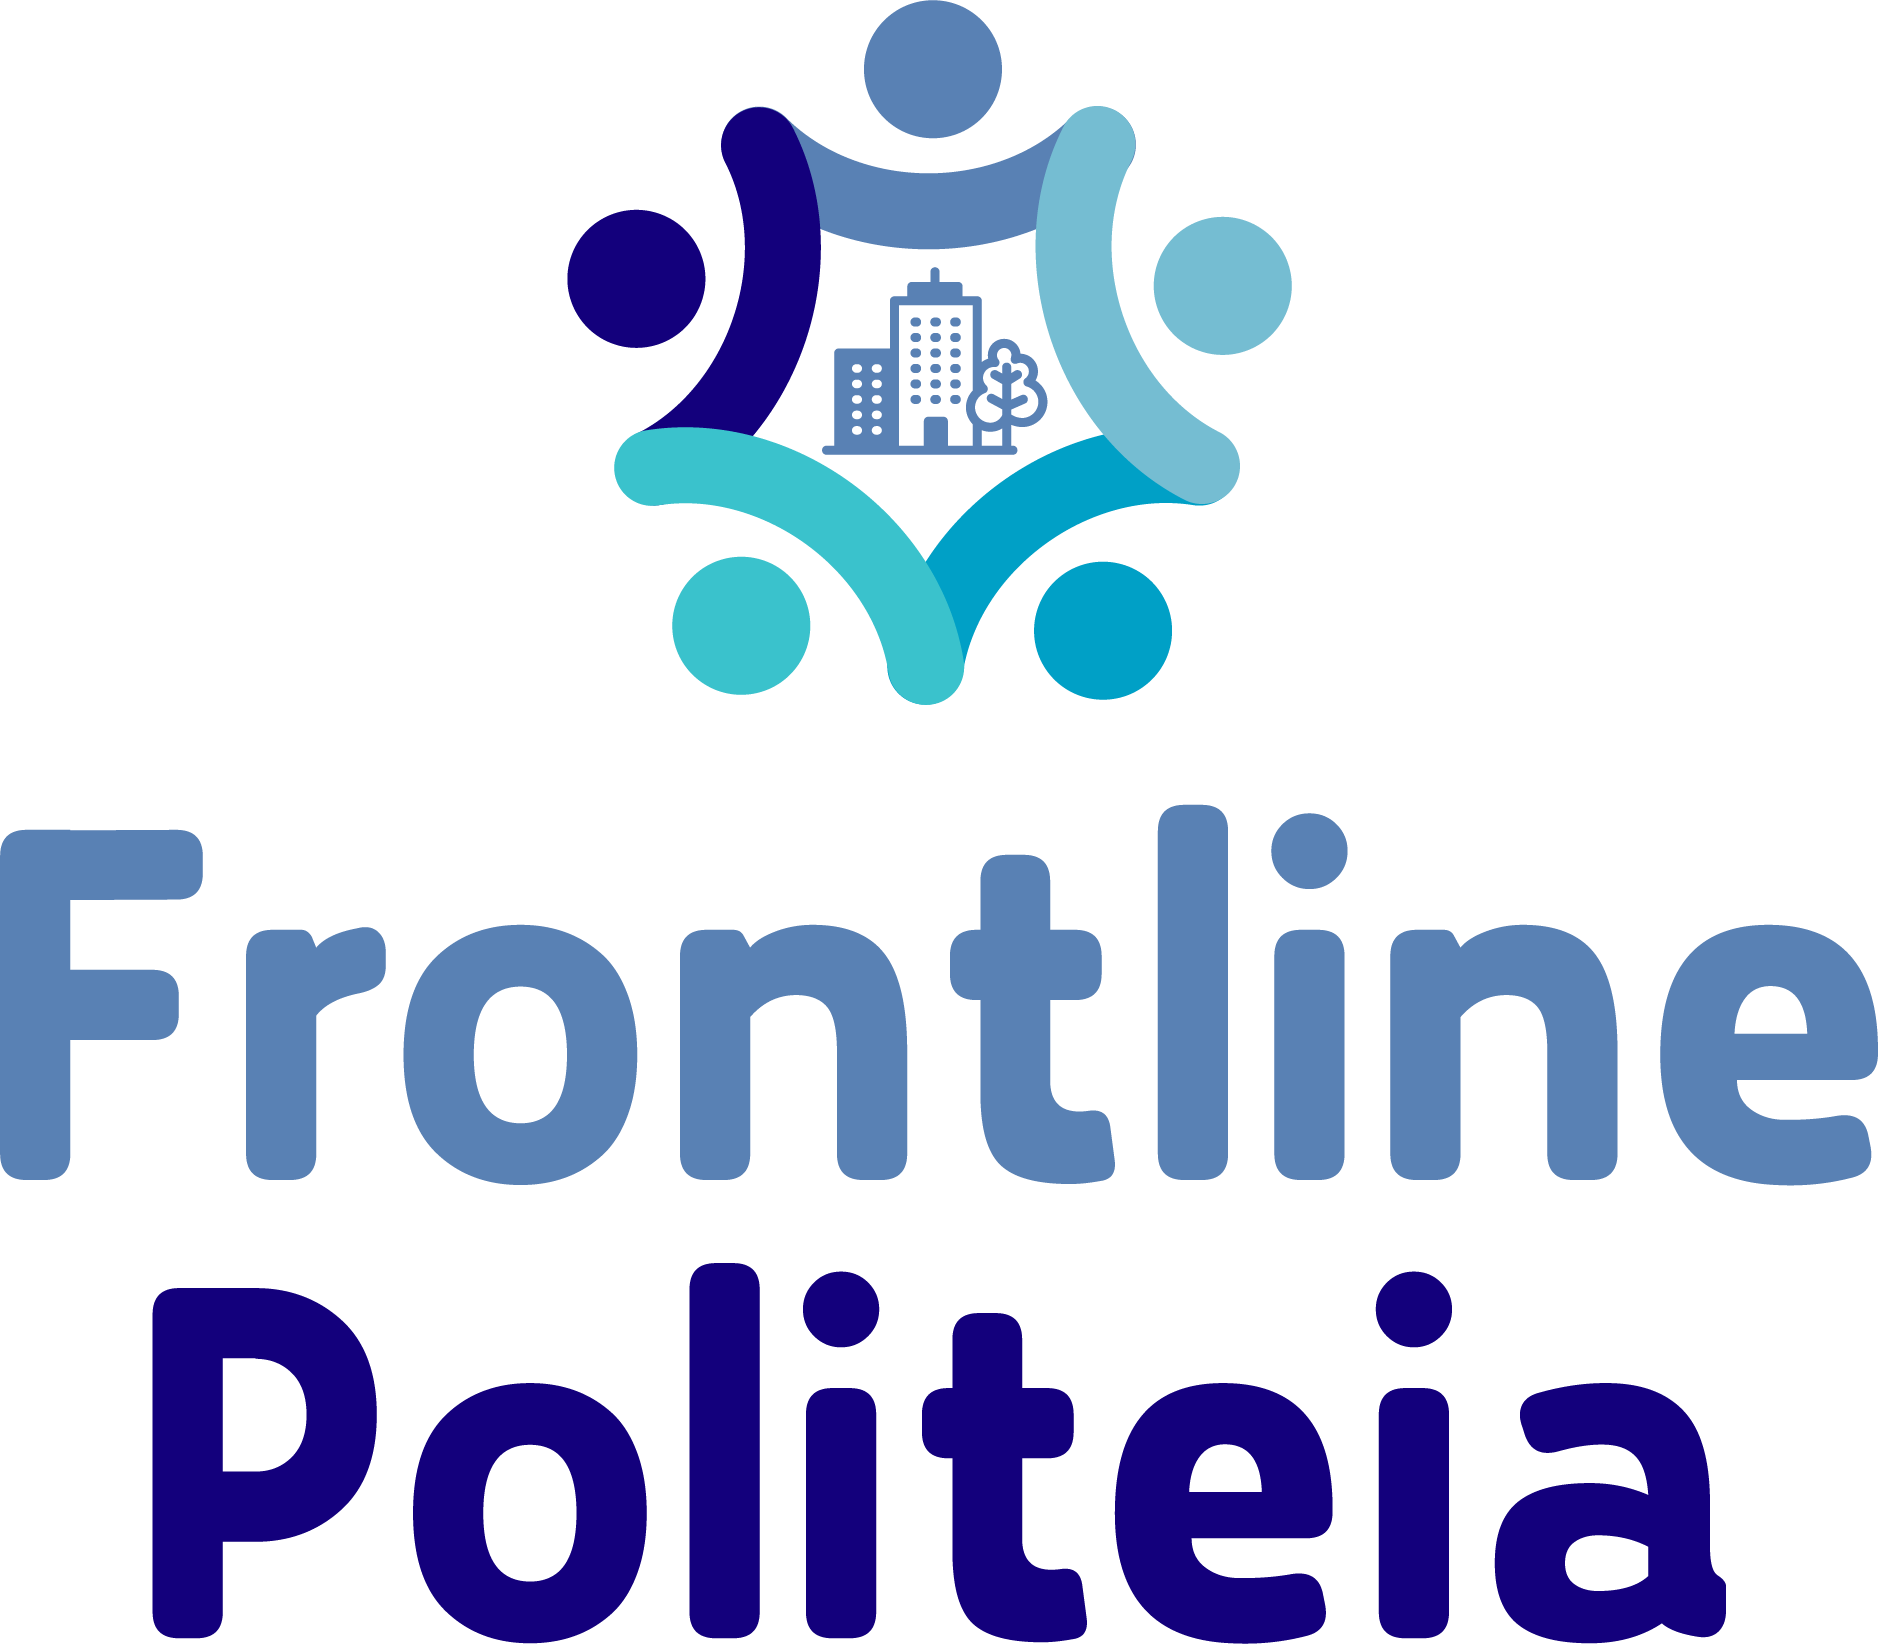 Frontline Politeia